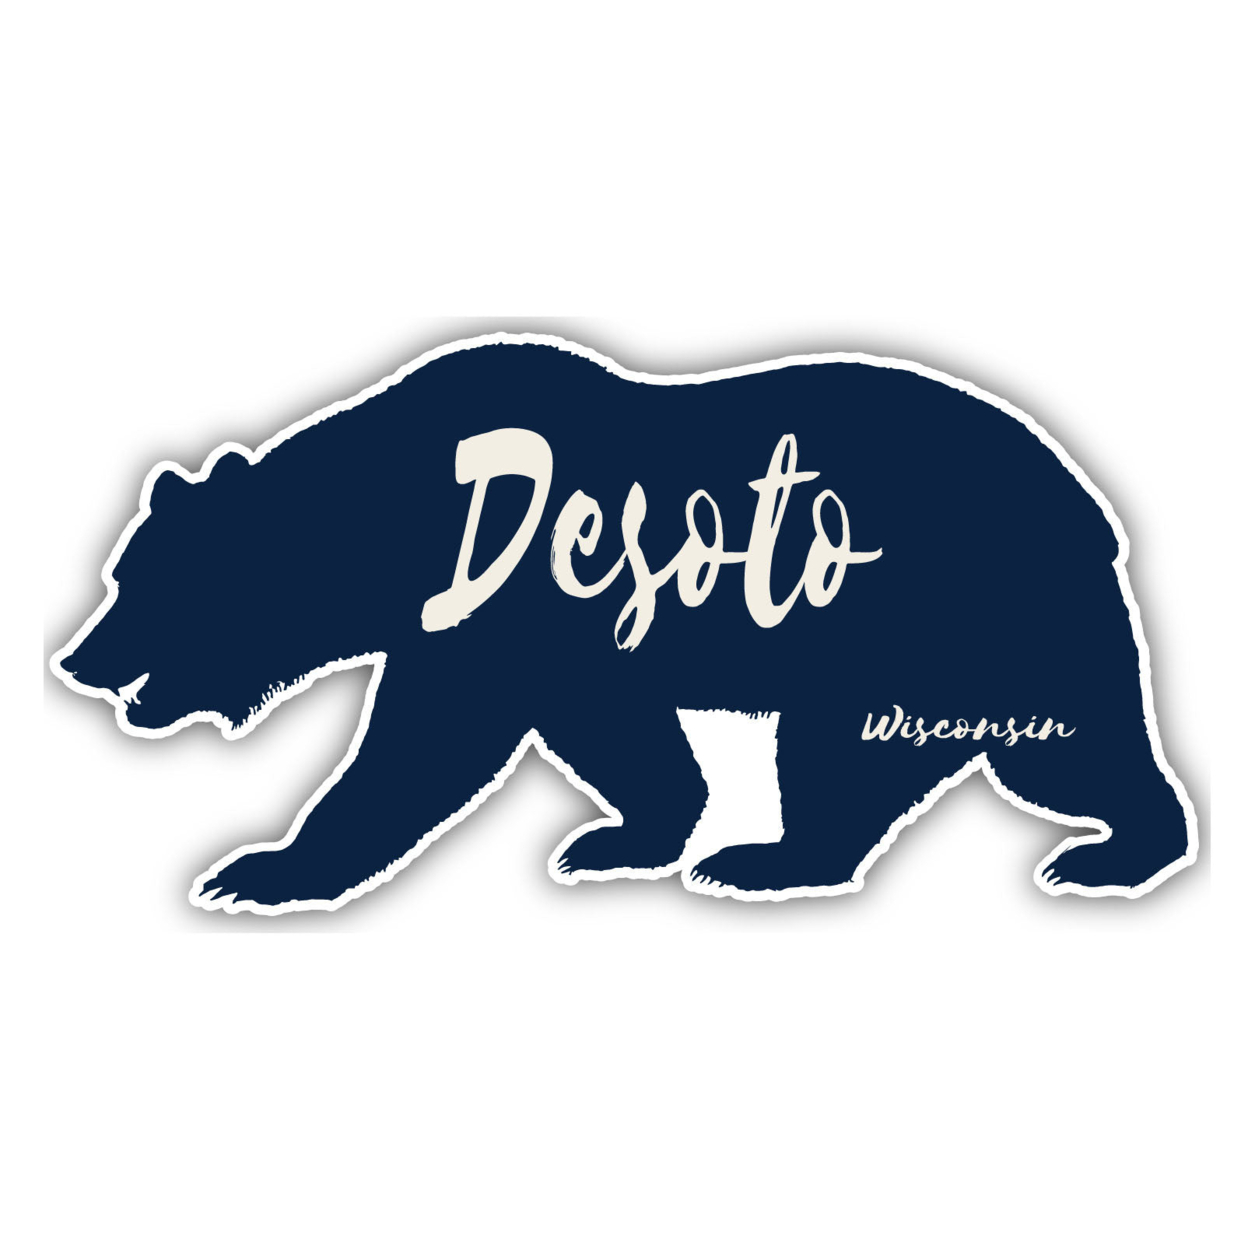 DeSoto Wisconsin Souvenir Decorative Stickers (Choose Theme And Size) - Single Unit, 4-Inch, Bear